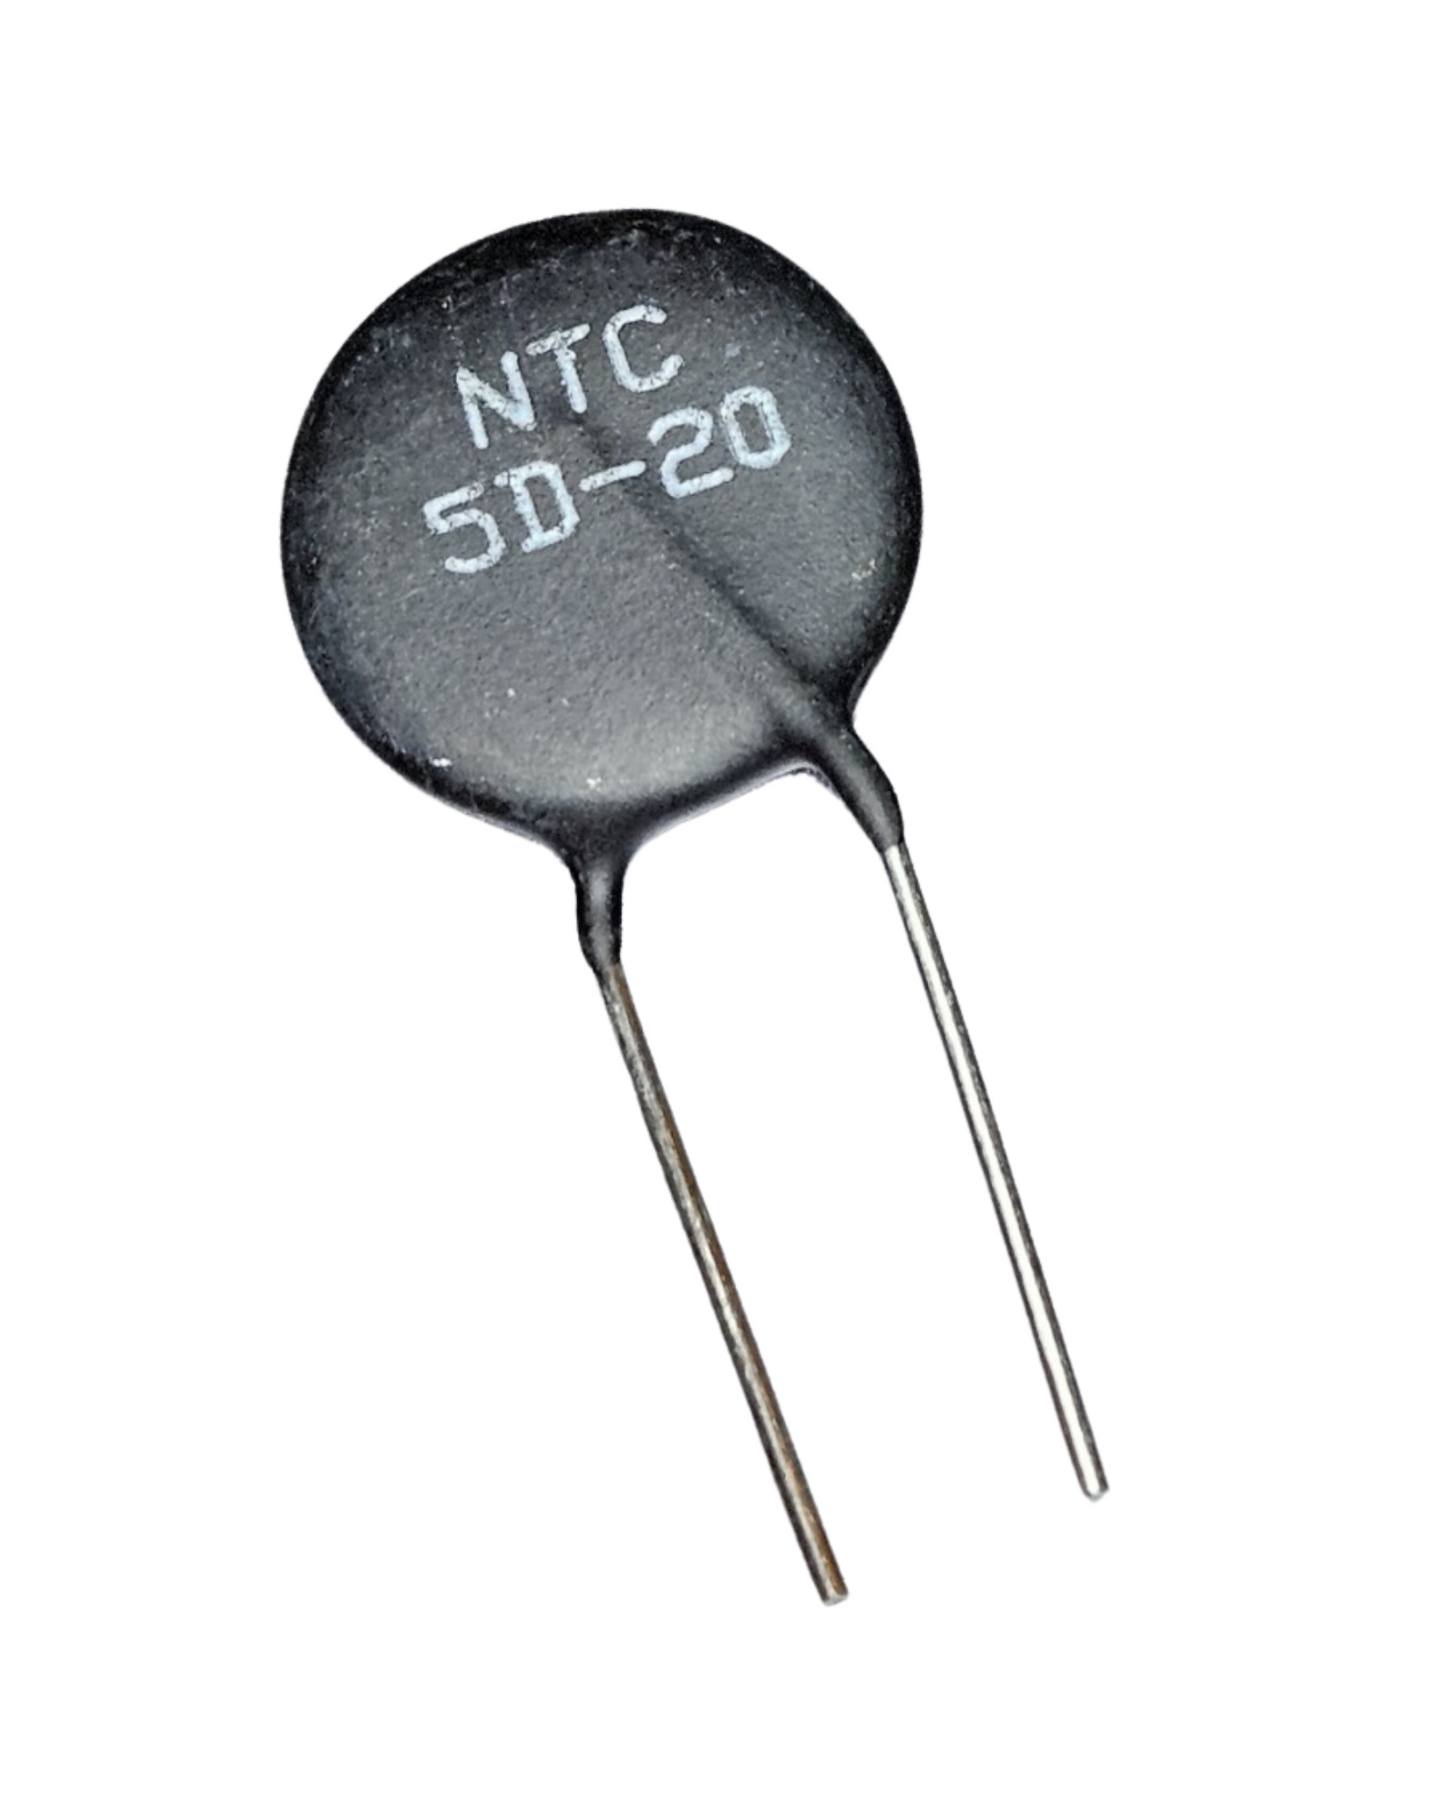 Termistor NTC5D-20